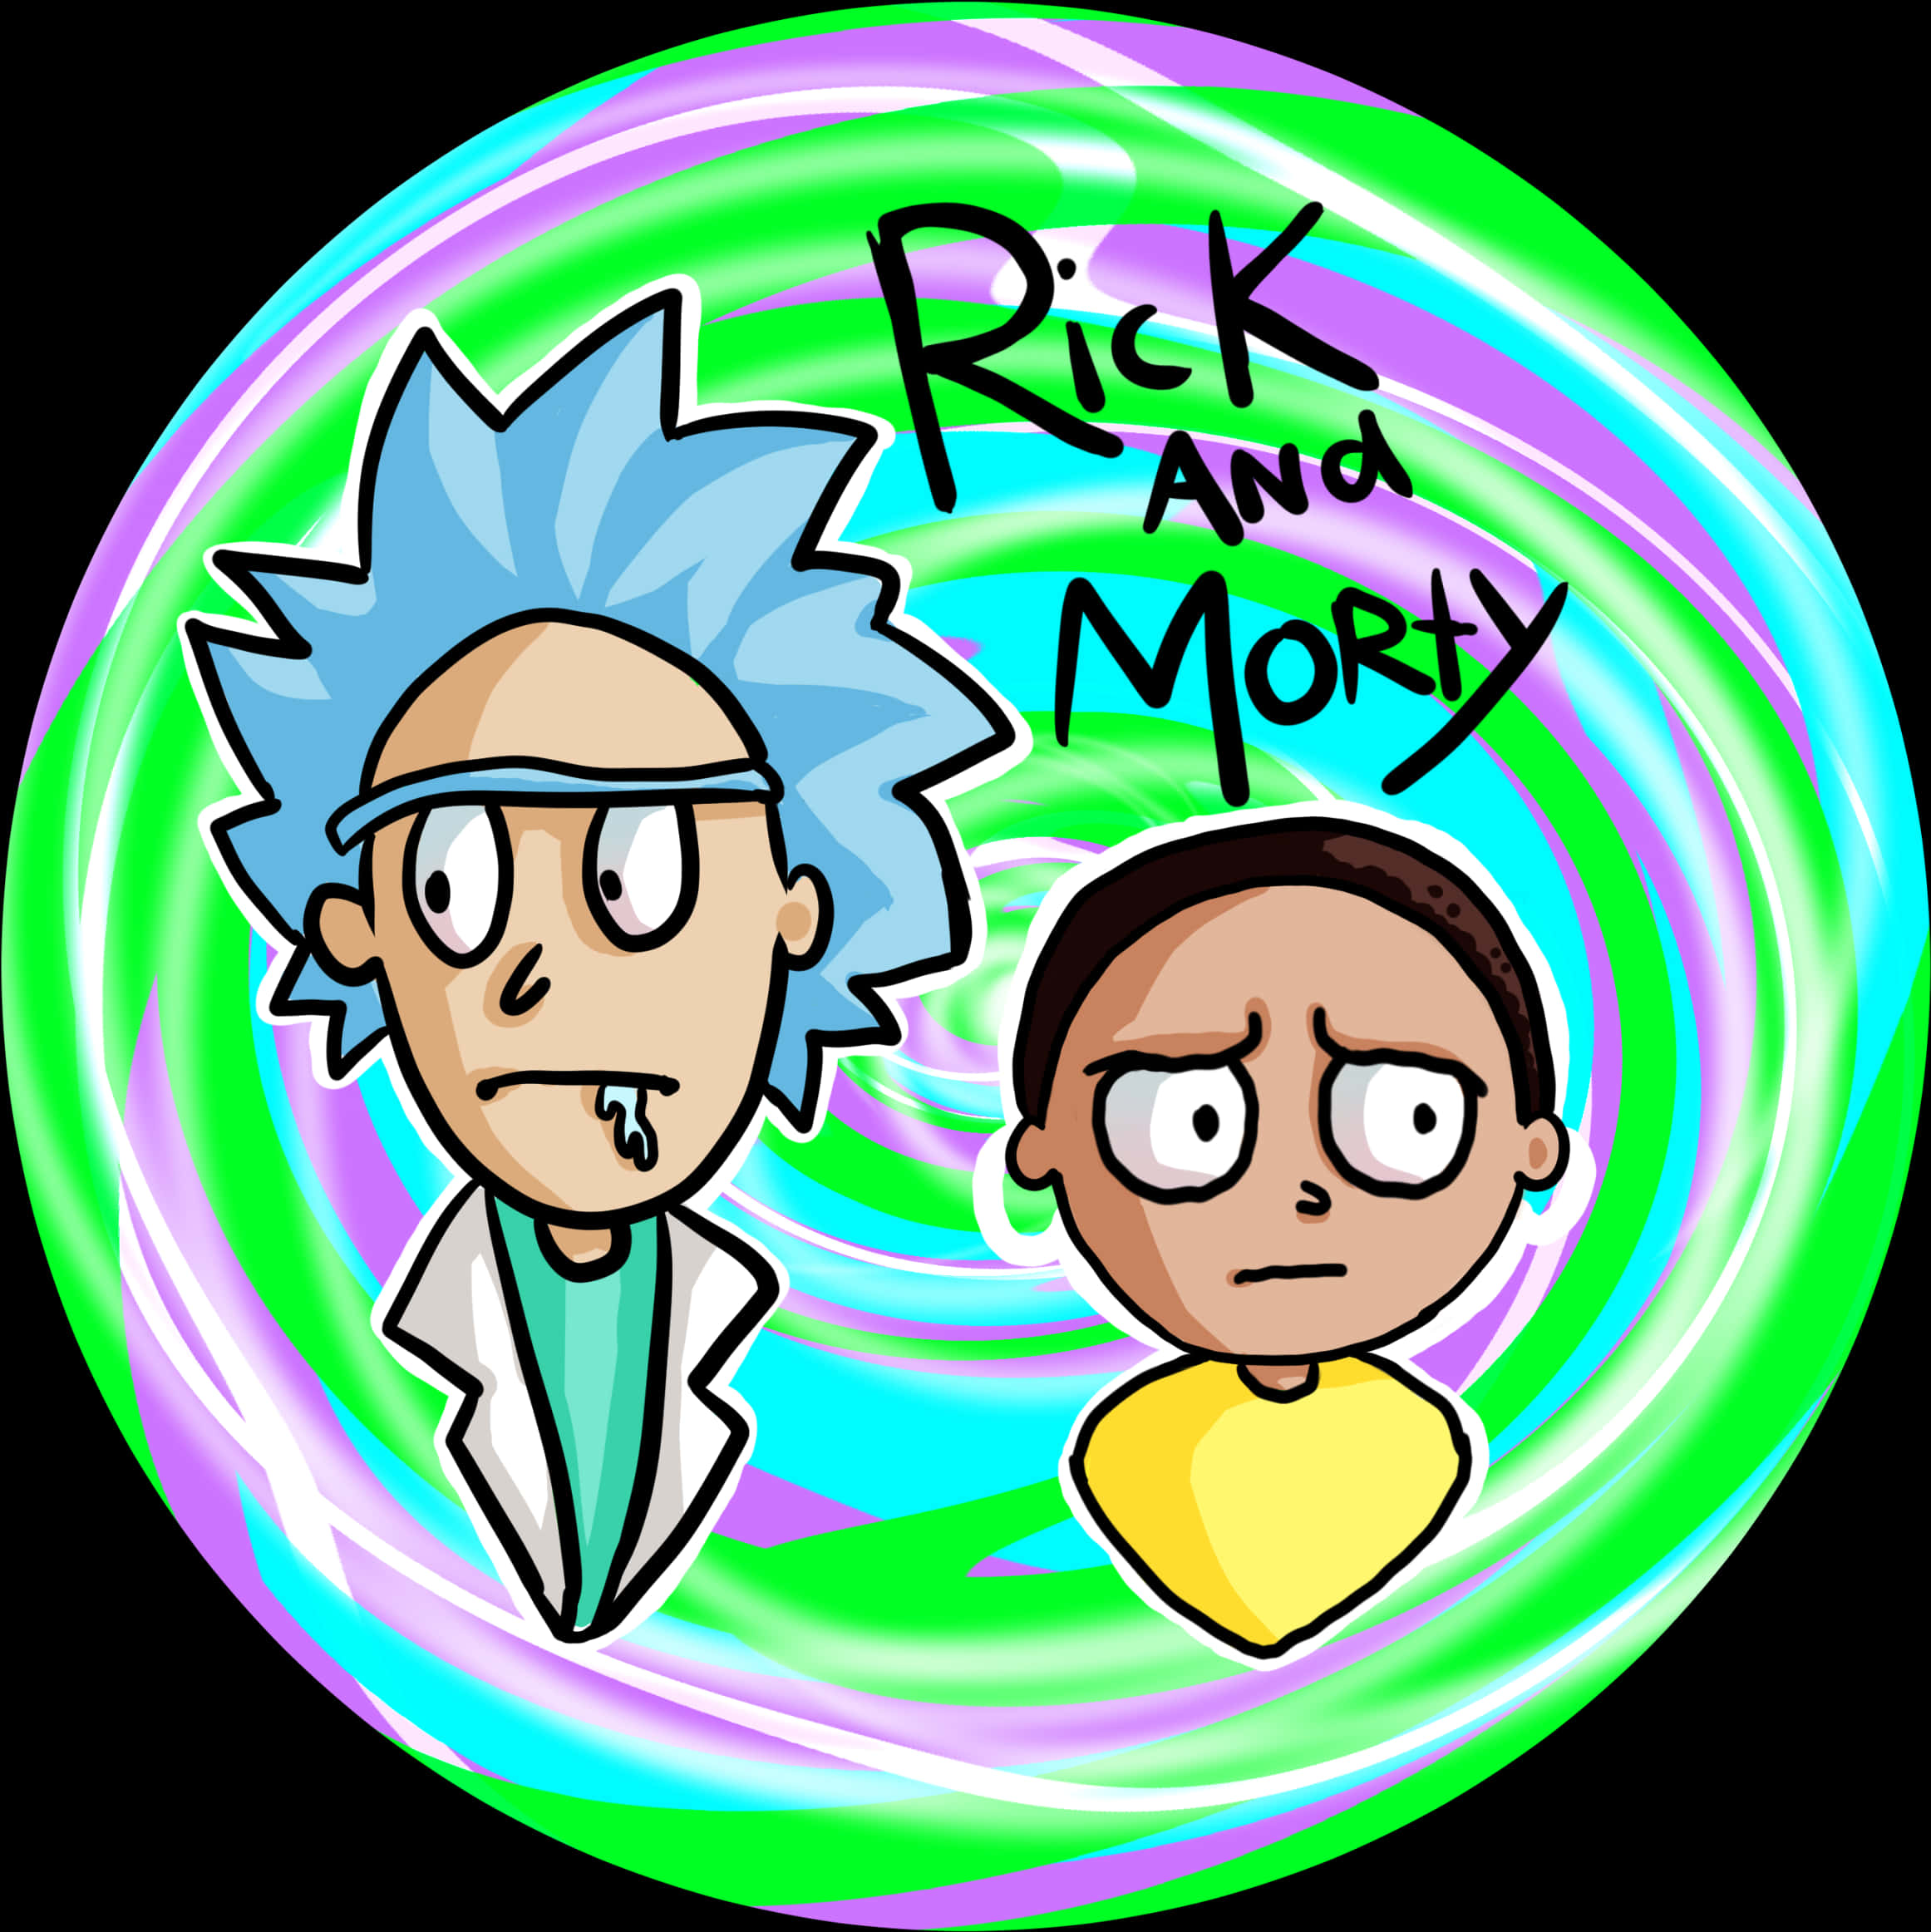 Rickand Morty Animated Characters PNG image